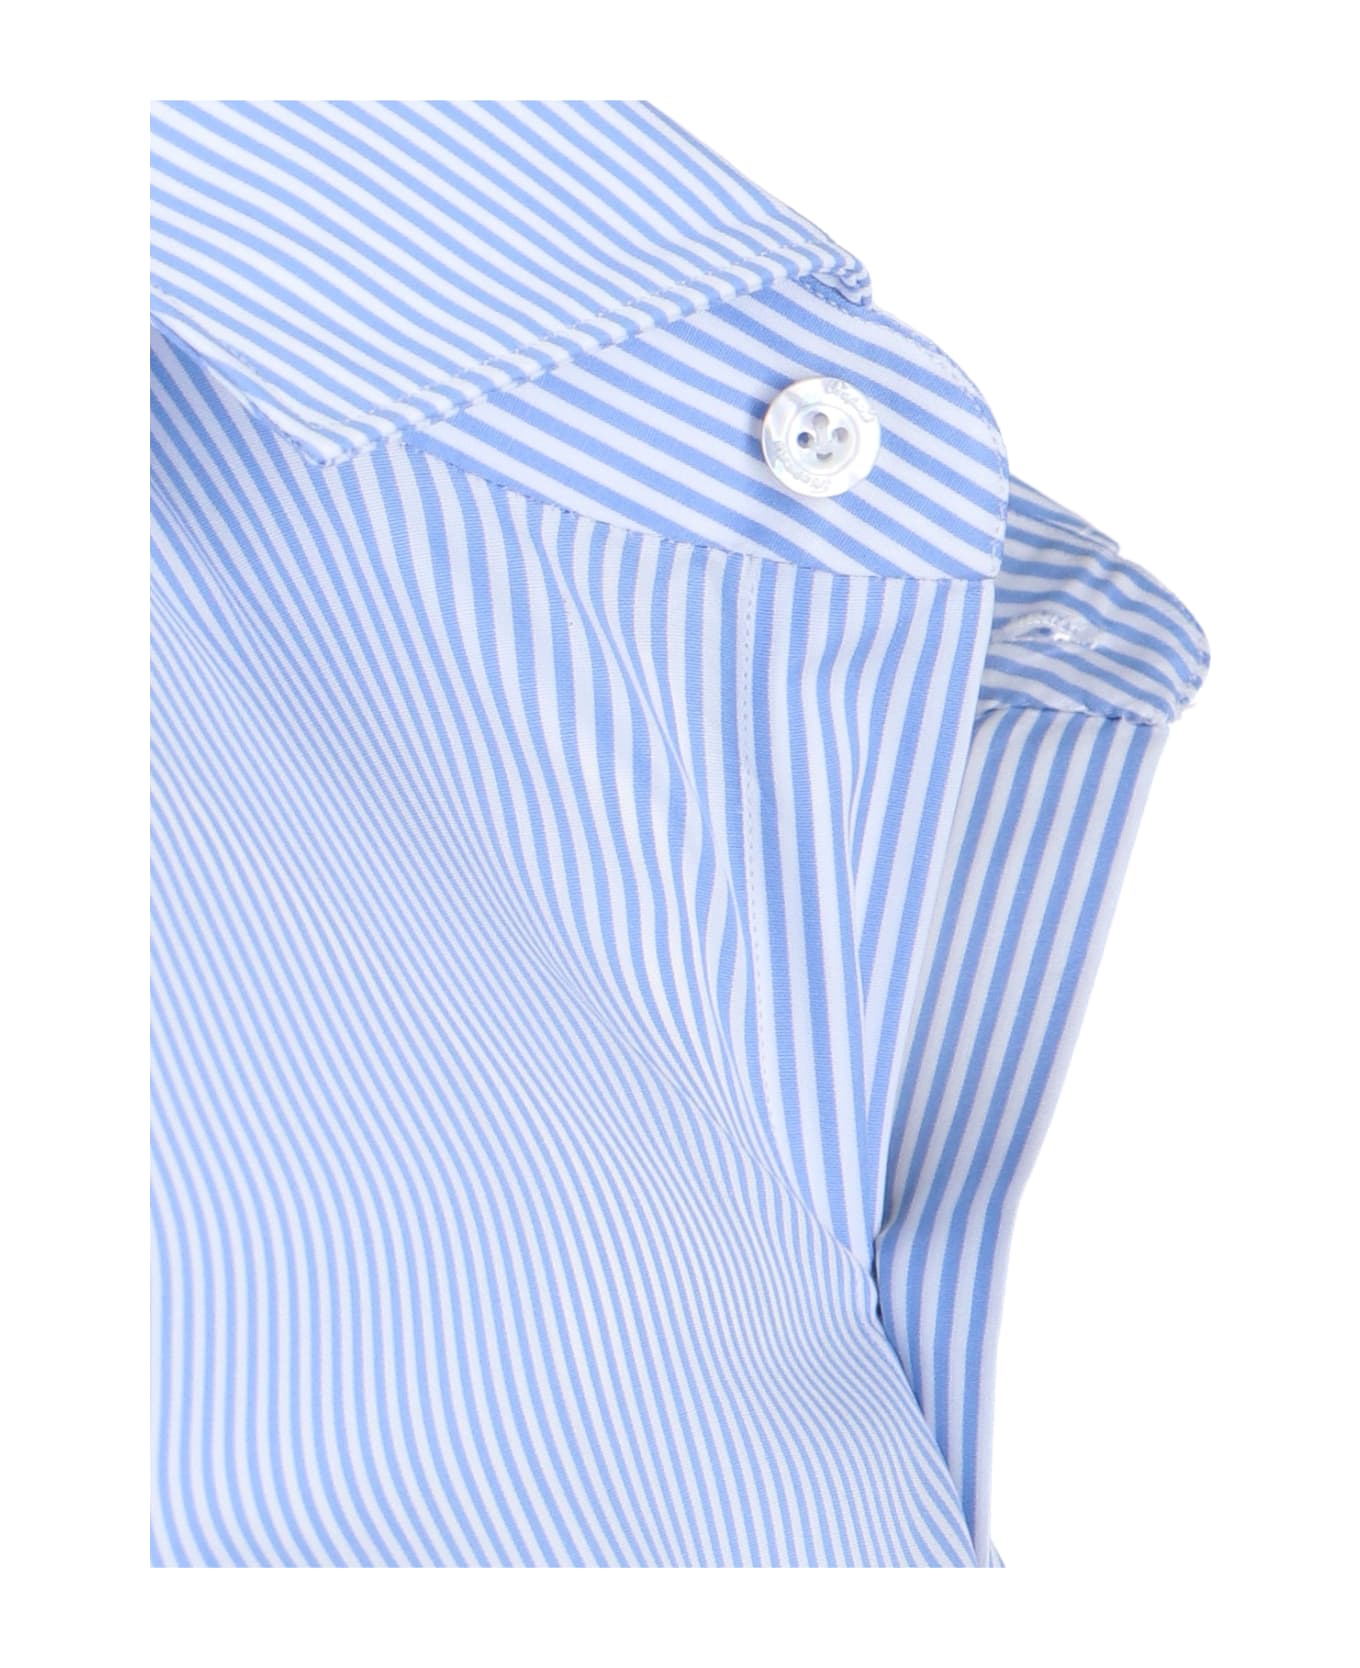 Finamore Shirt - Light blue